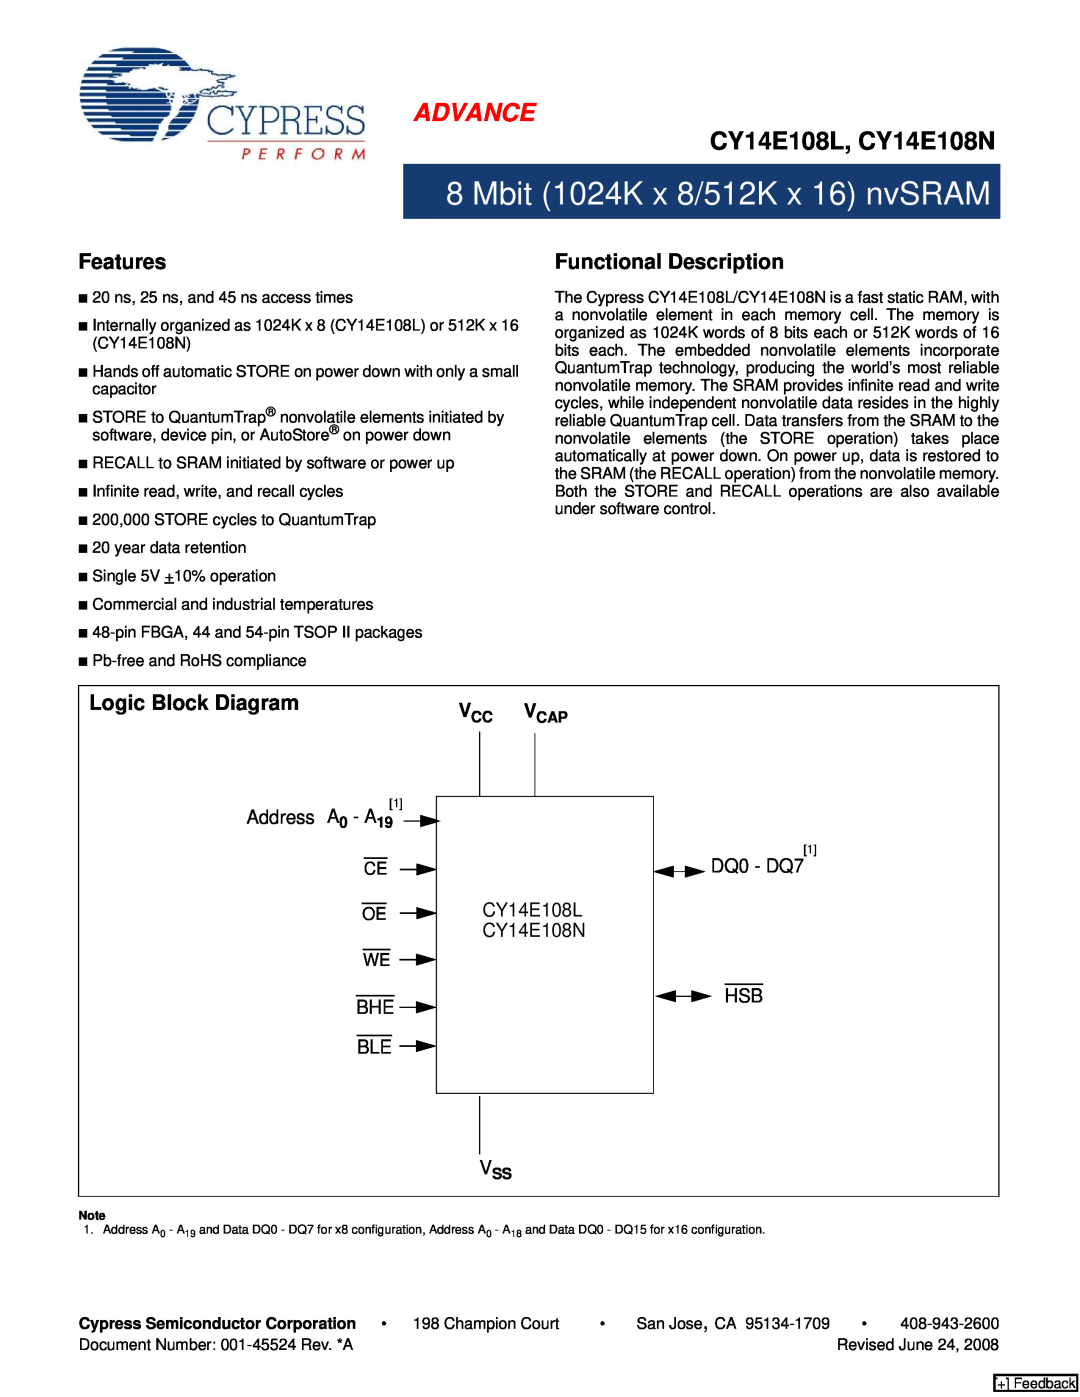 Cypress manual Advance, CY14E108L, CY14E108N, Features, Functional Description, Logic Block Diagram, Address A0 - A191 